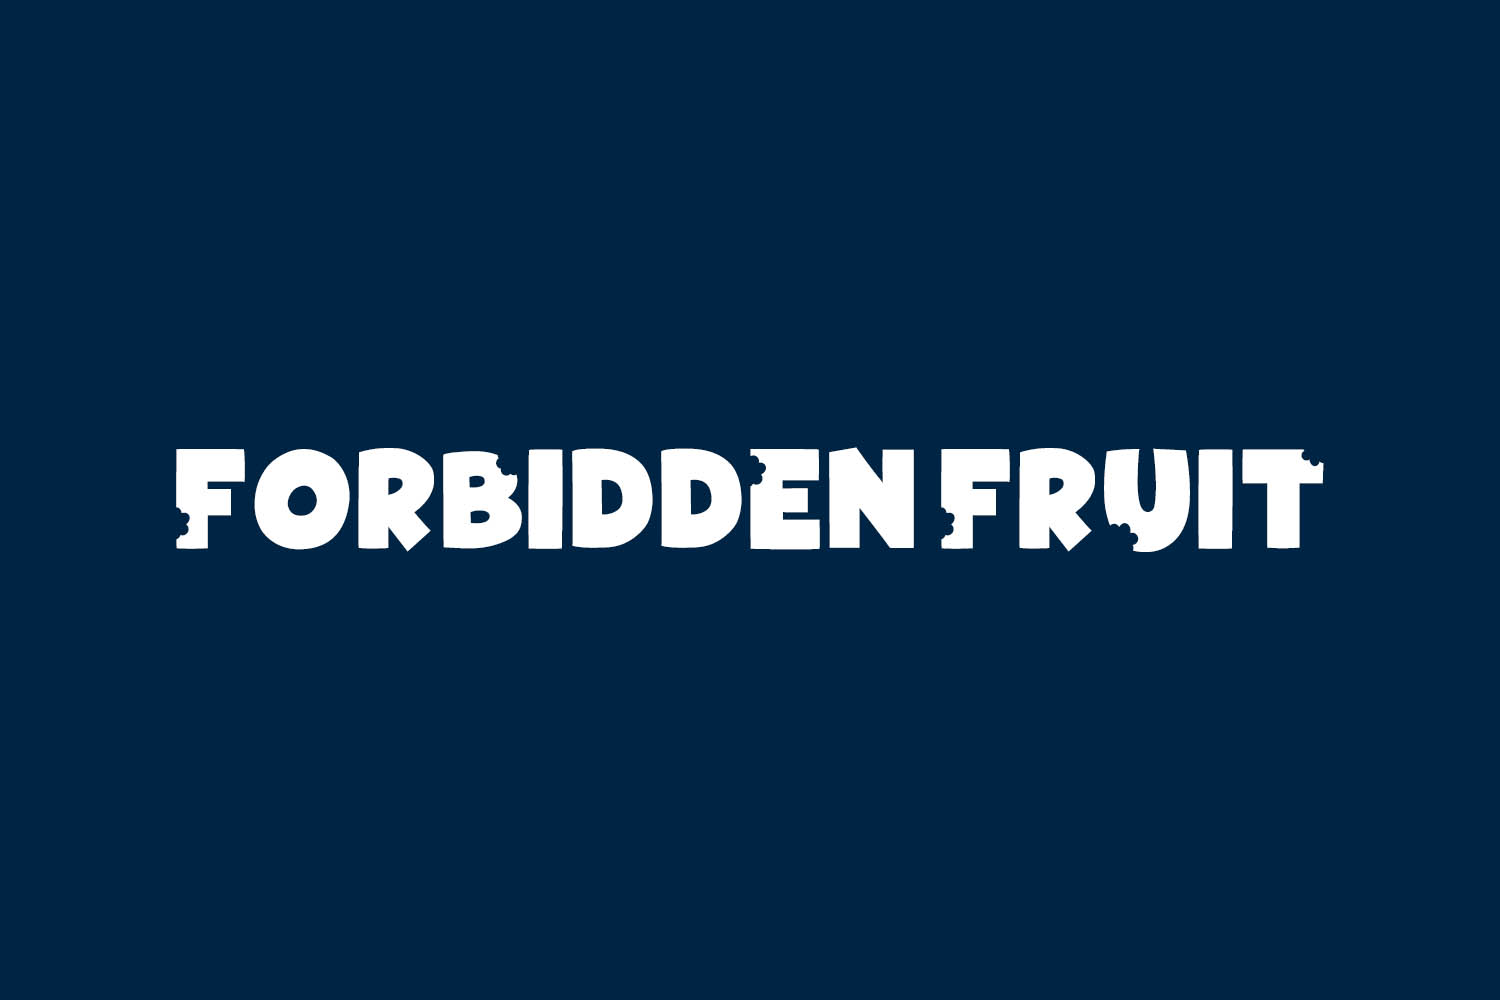 Forbidden Fruit Free Font